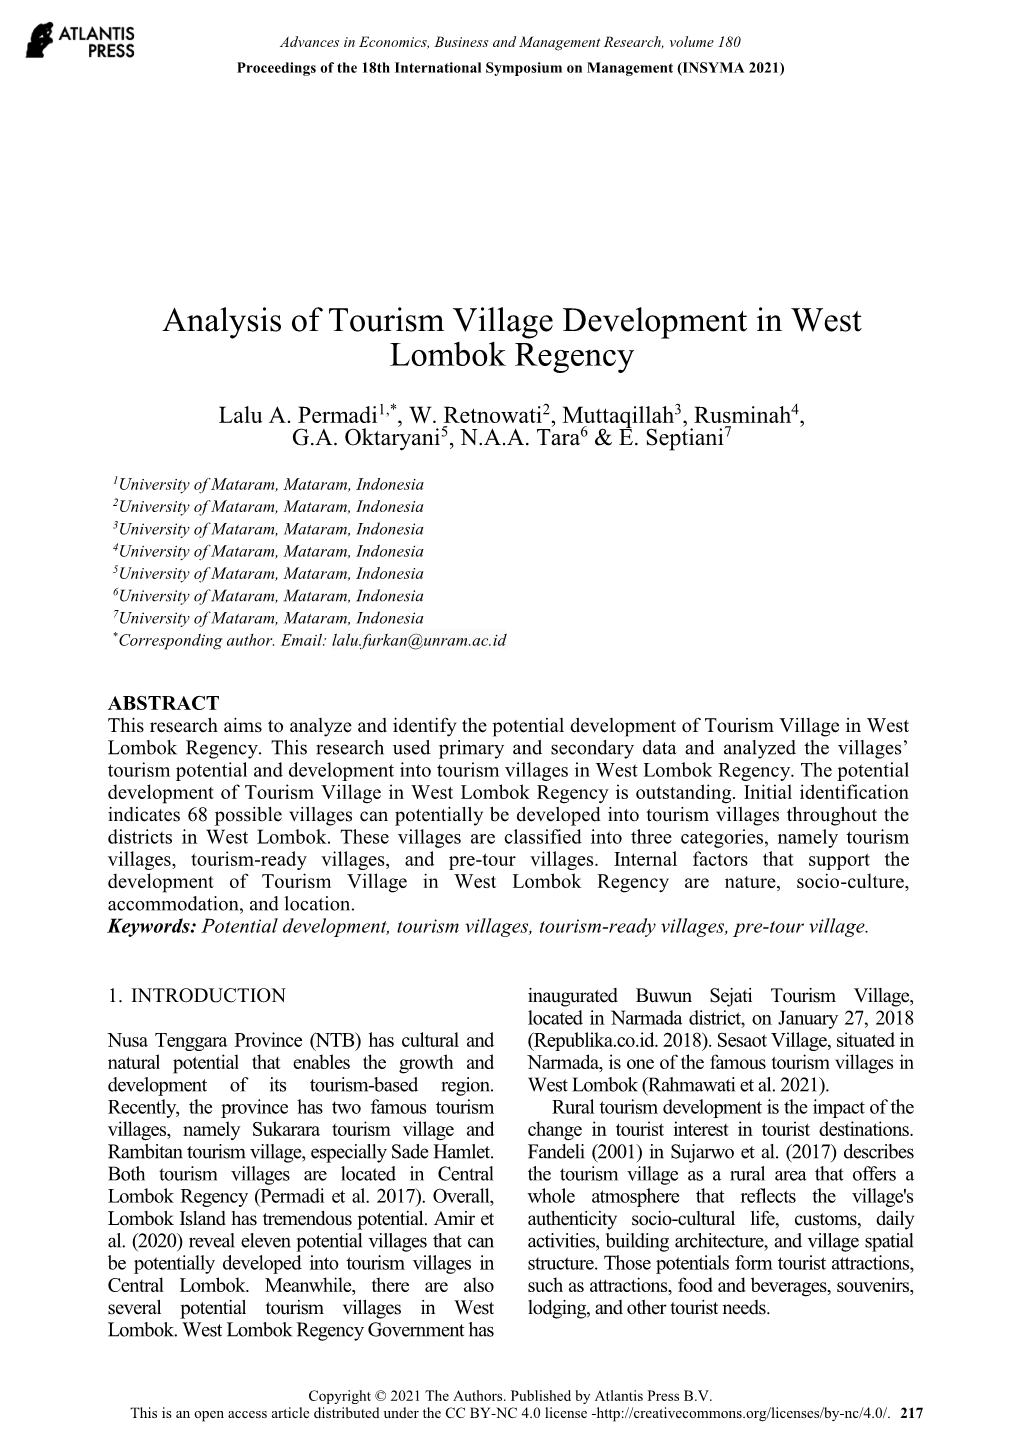 Analysis of Tourism Village Development in West Lombok Regency